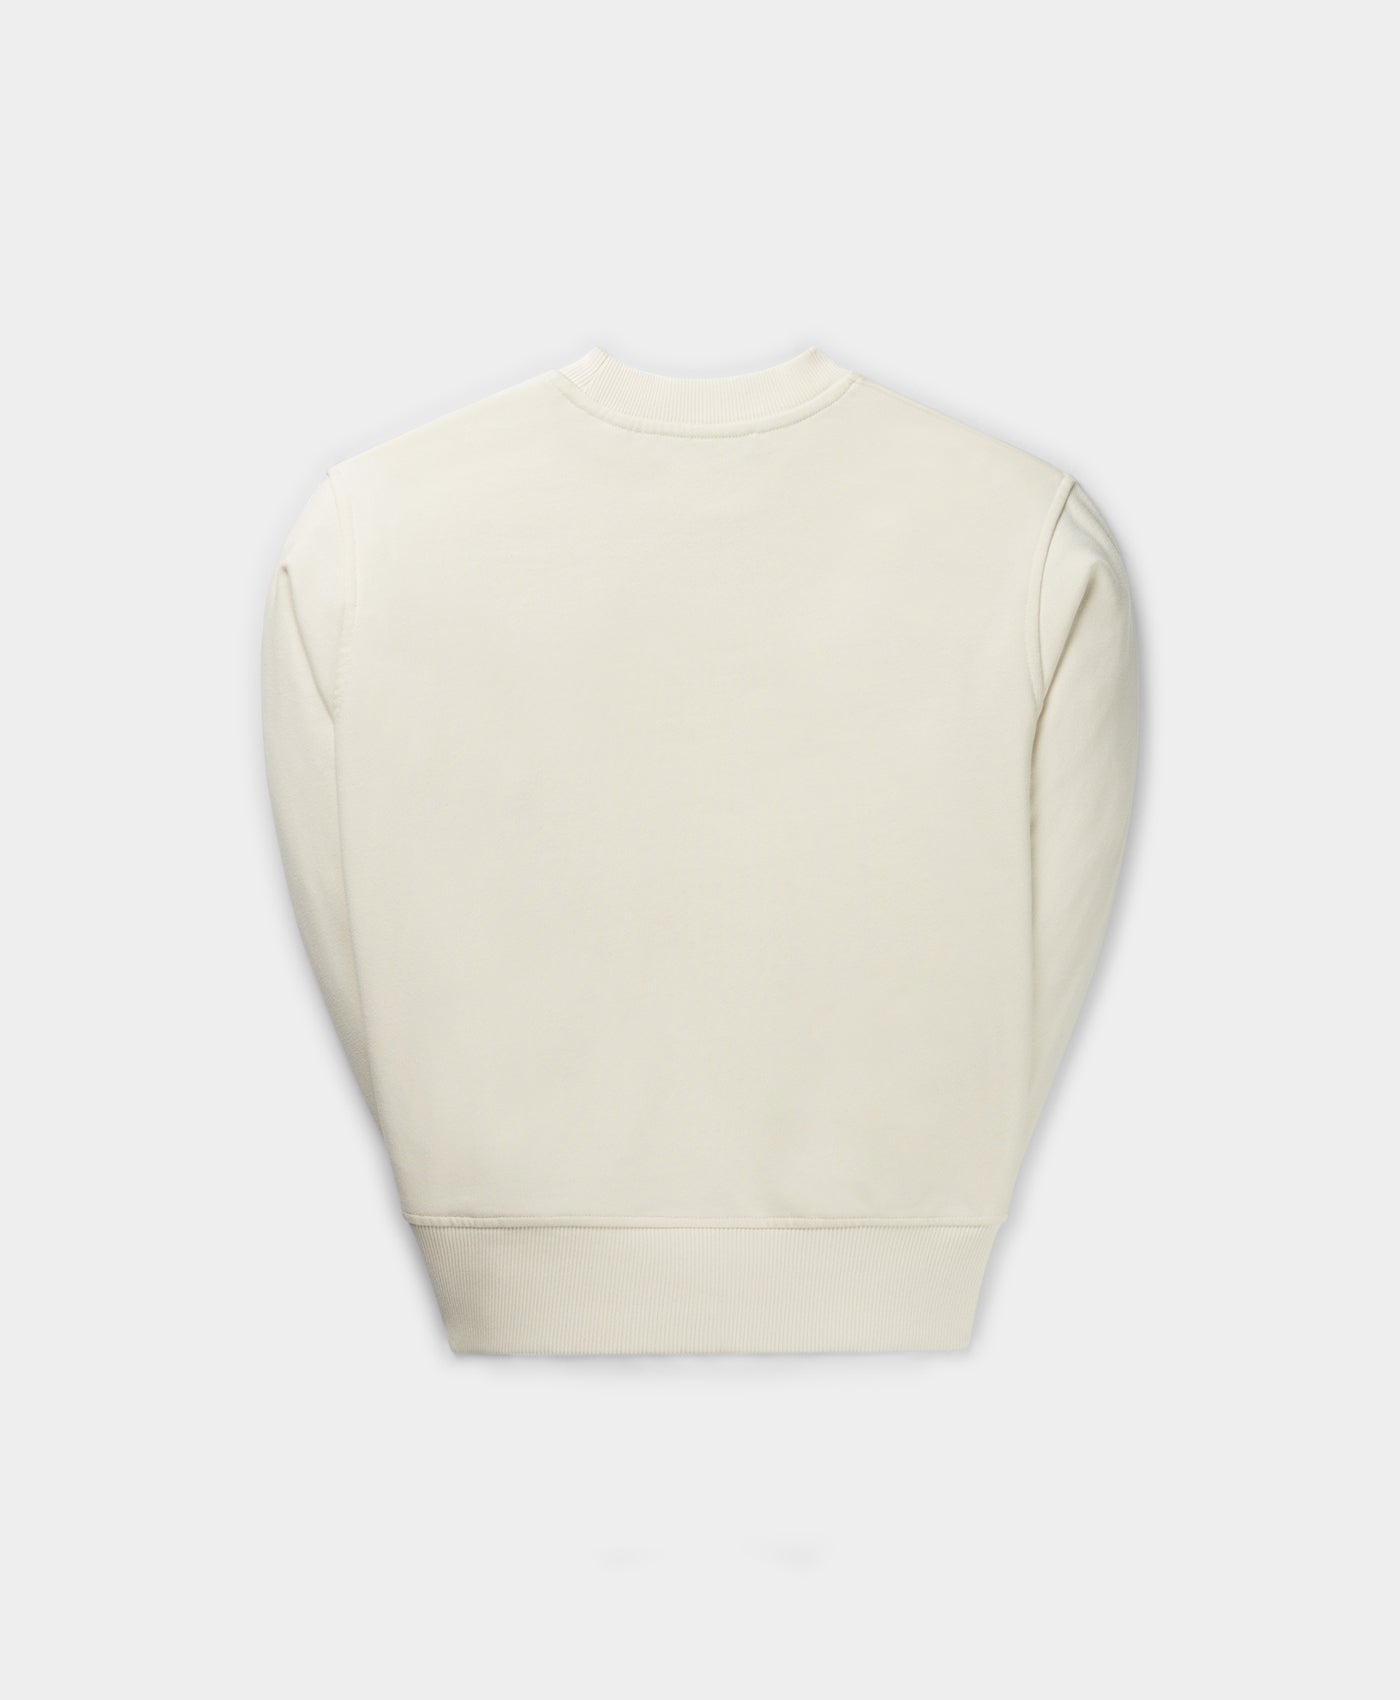 DP - Egret White Escript Sweater - Packshot - Rear